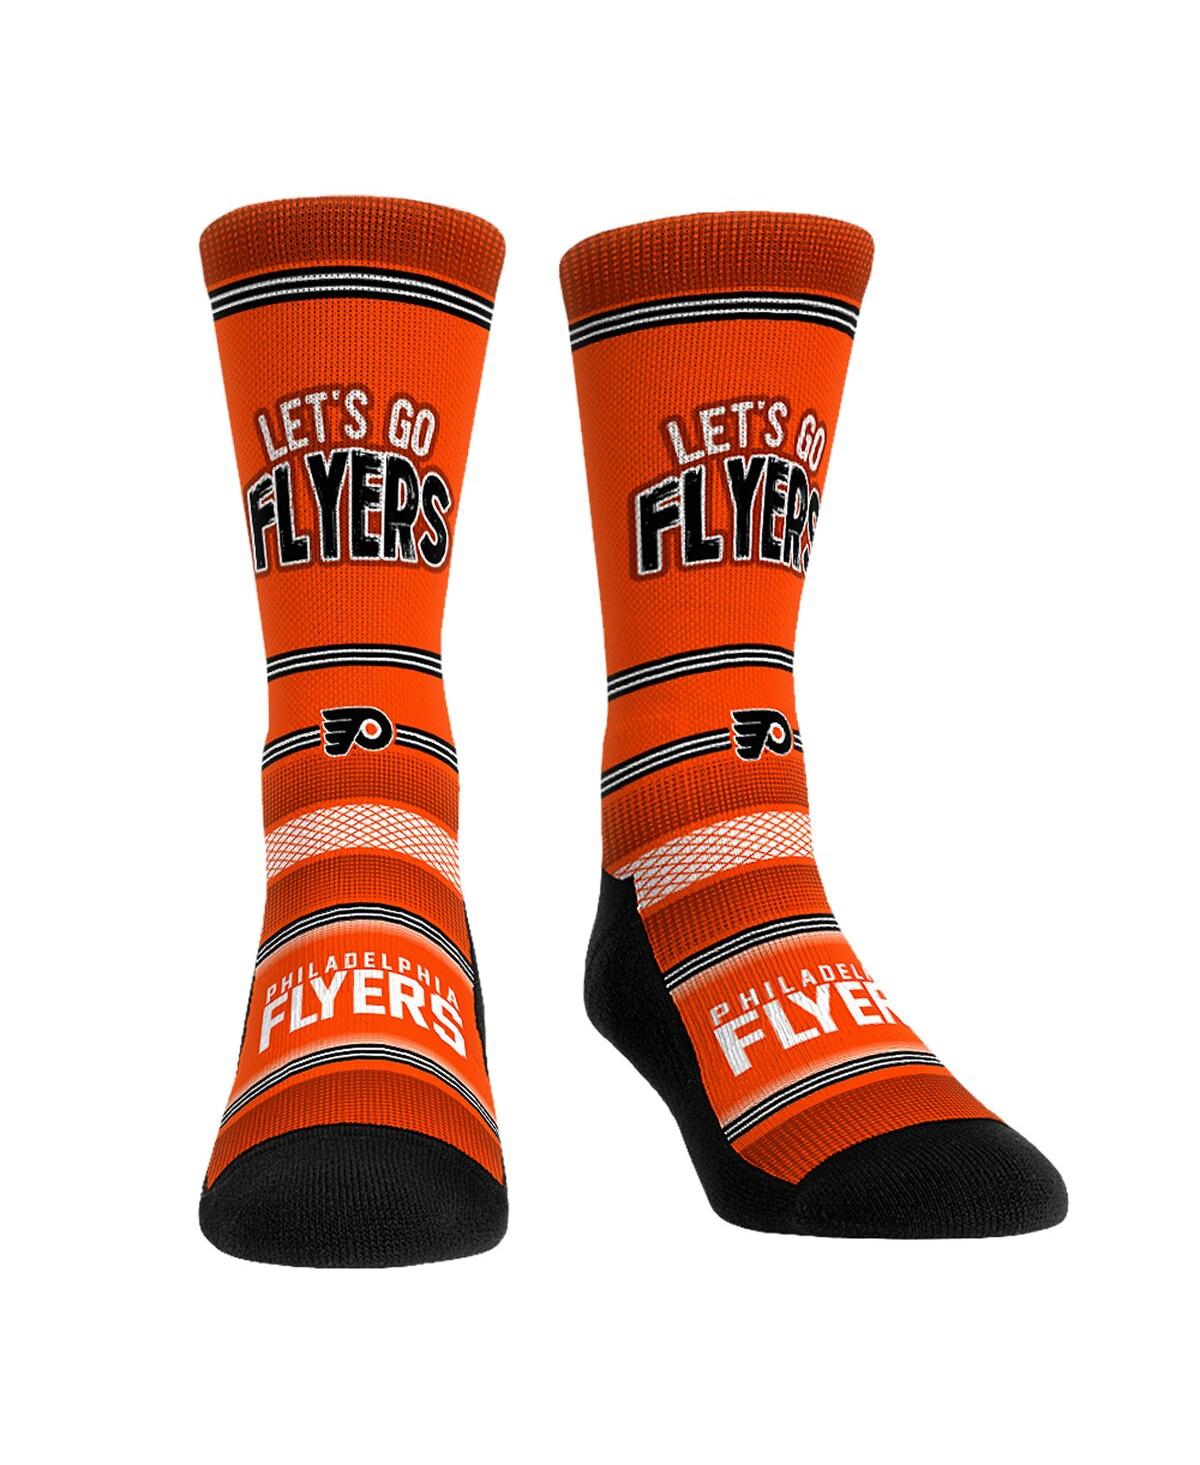 Rock 'em Men's And Women's  Socks Philadelphia Flyers Team Slogan Crew Socks In Orange